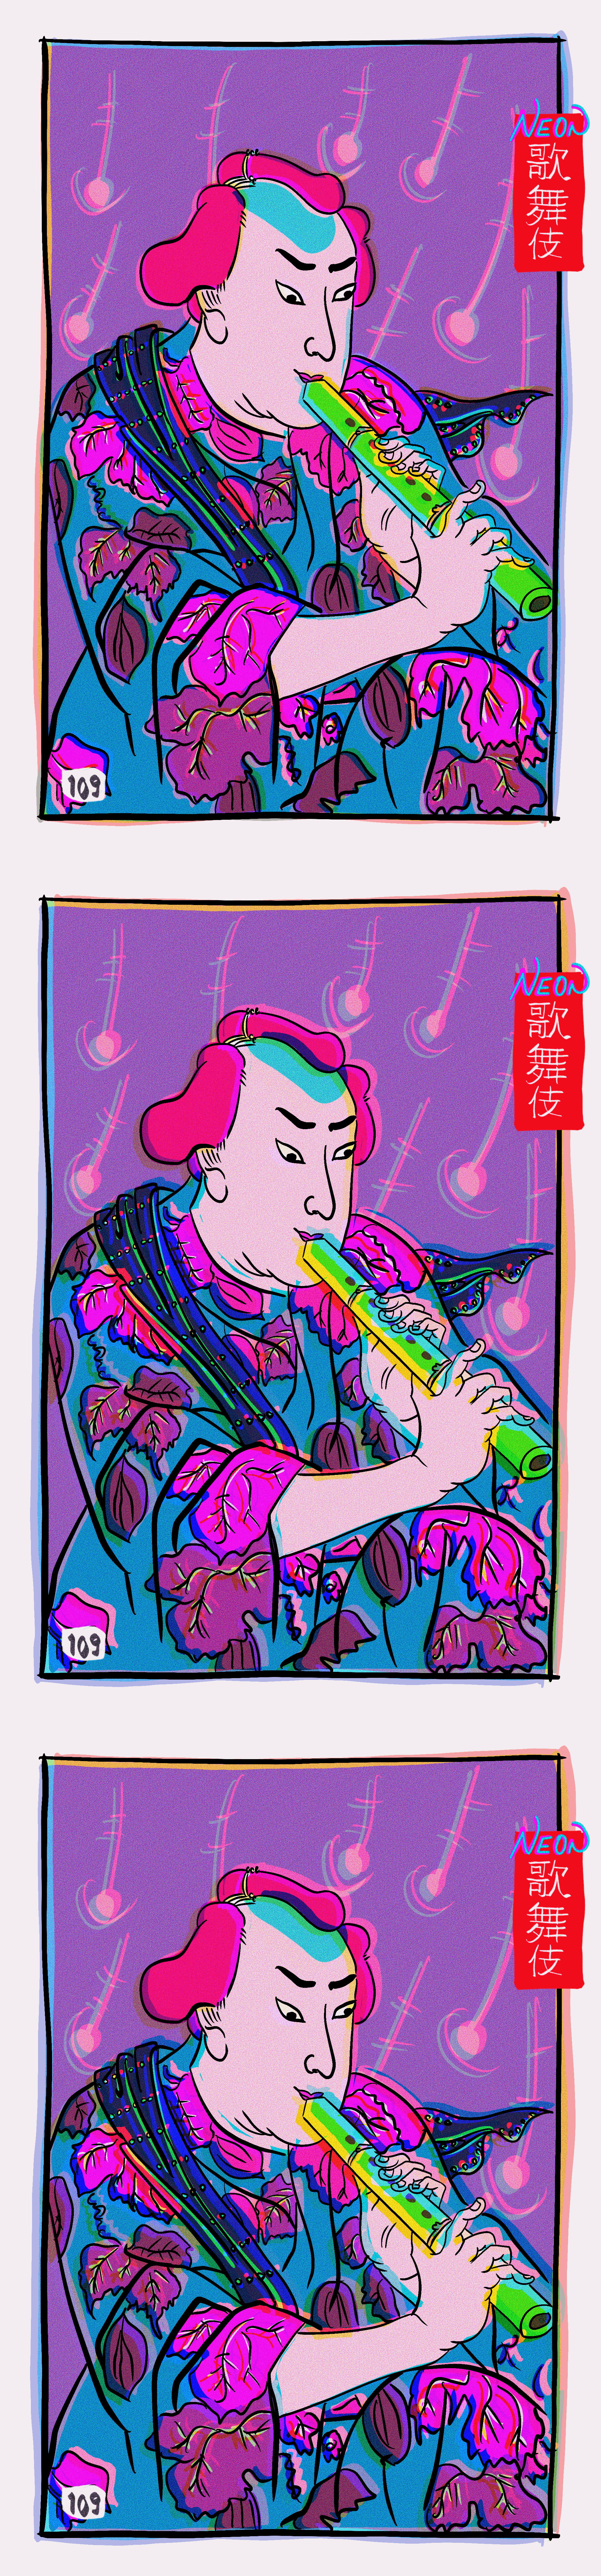 Neon Kabuki #109